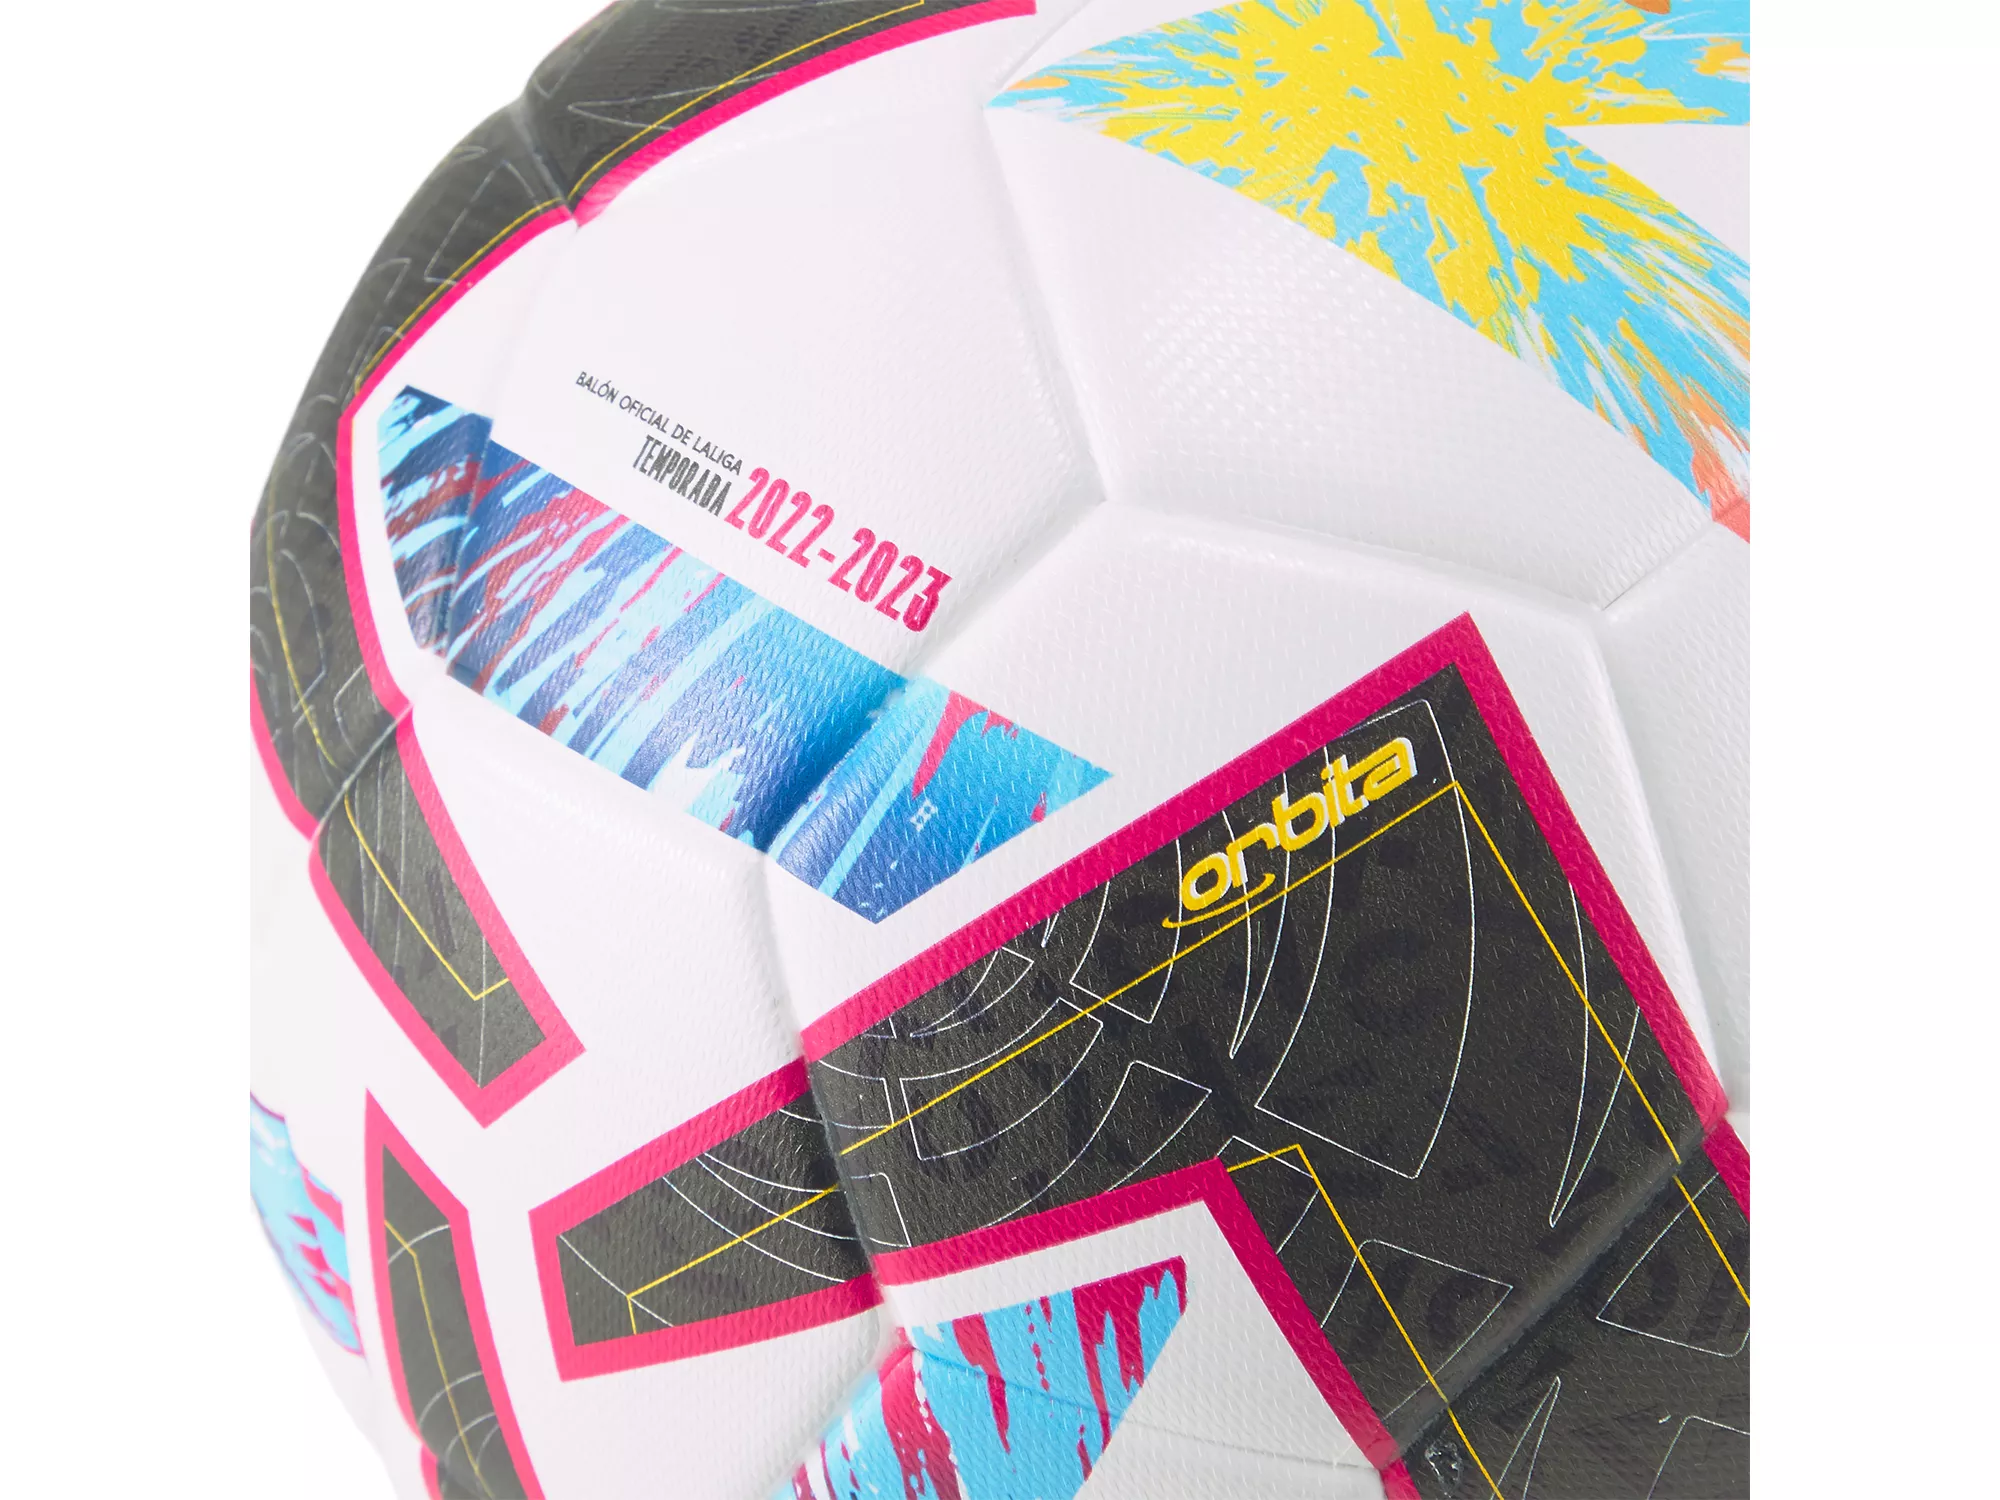 Puma Orbita Laliga 1 (FIFA QUALITY) Soccer Ball